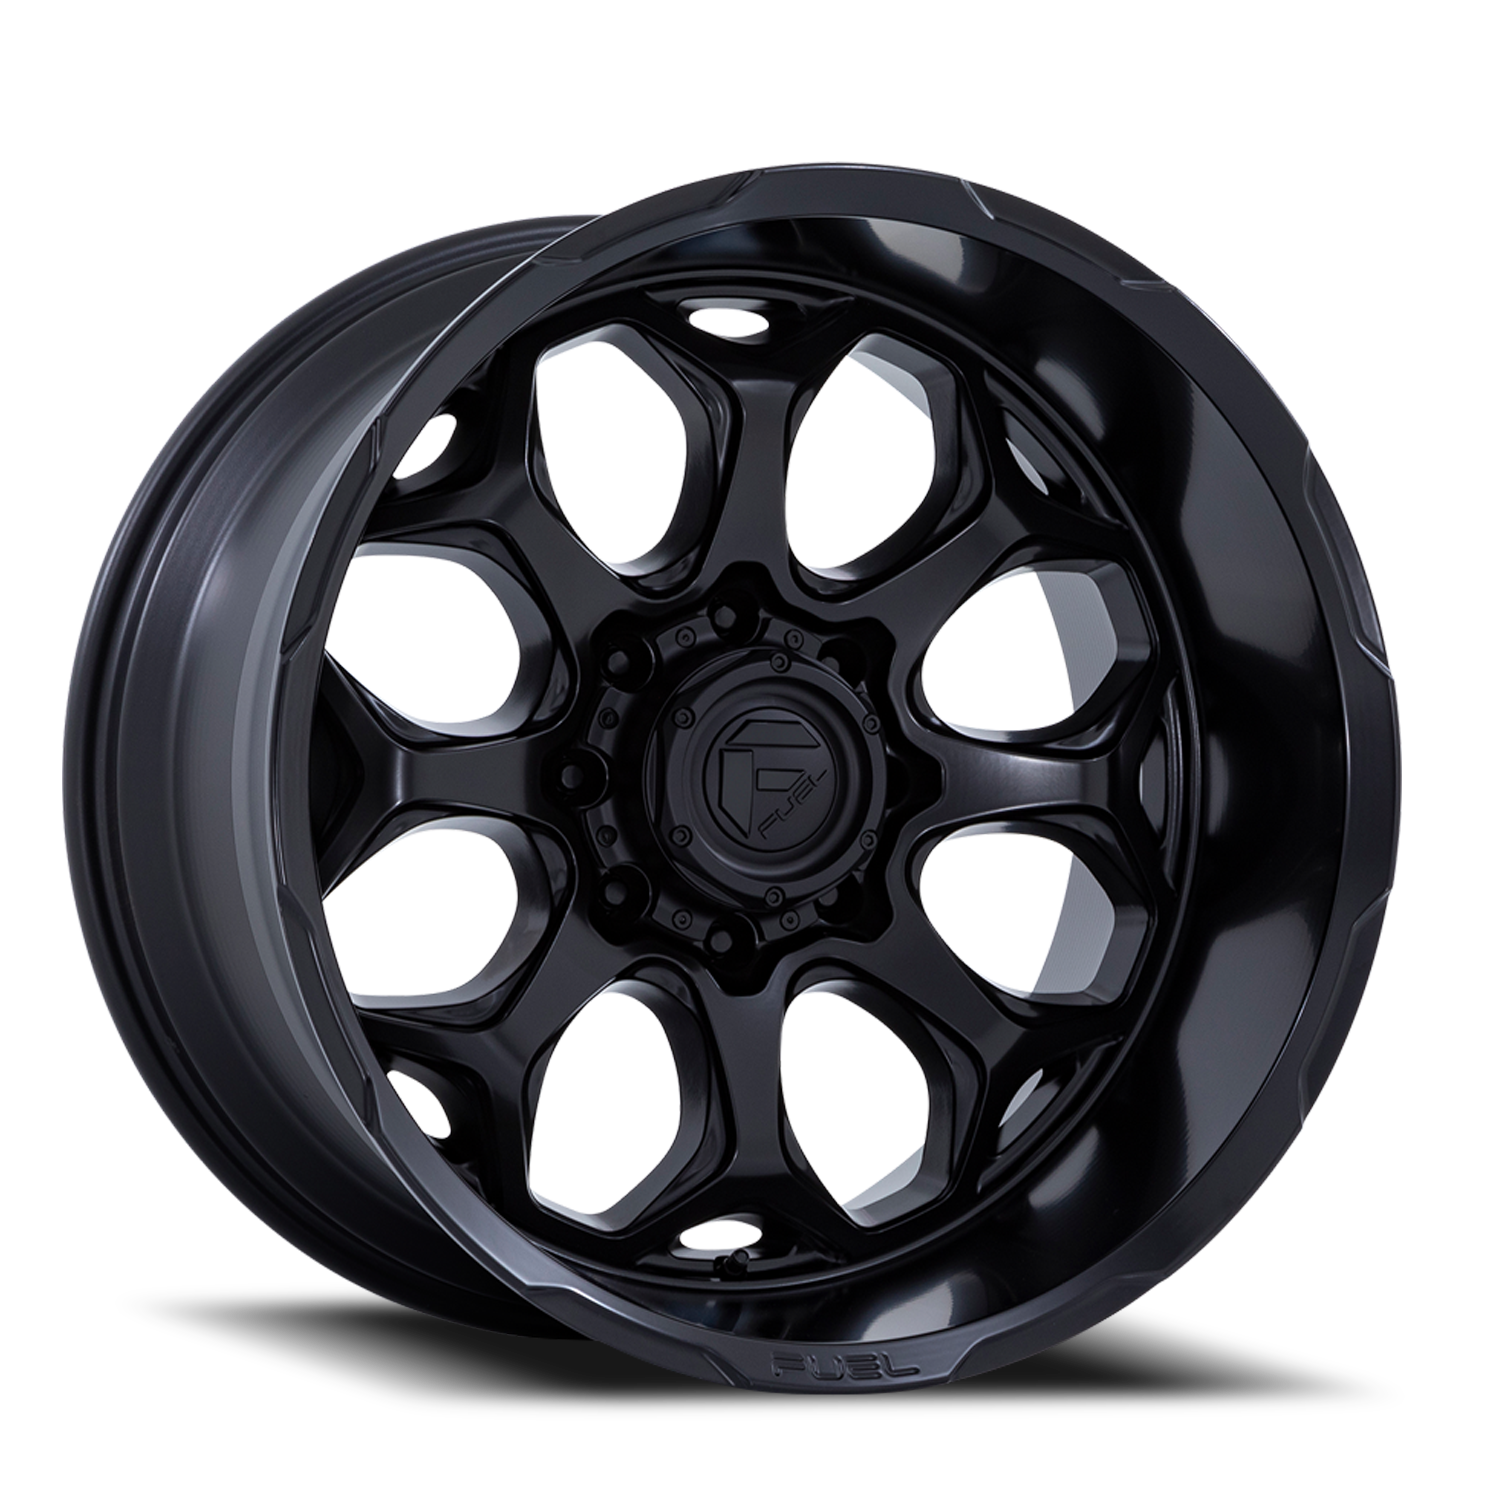 Aluminum Wheels 22X10 Scepter FC862 MX 6 On 139.7 Blackout 106.1 Bore -18 Offset Fuel Off Road Wheels